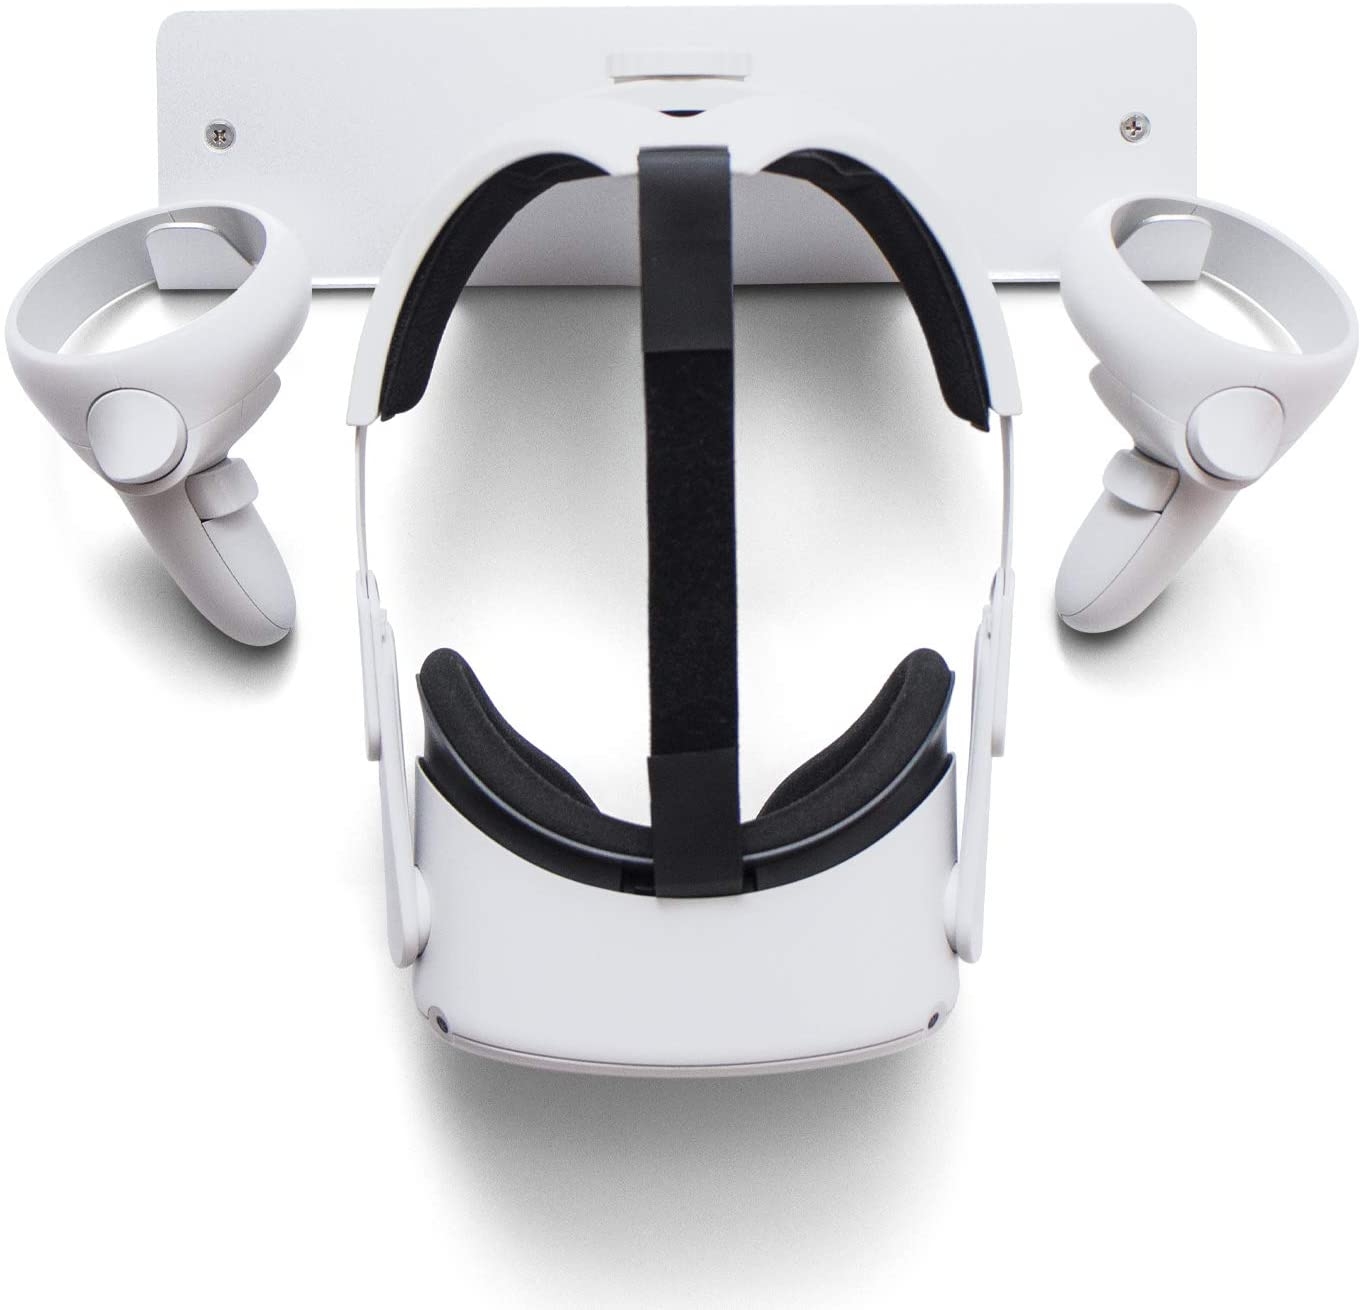 VR Ophangsysteem voor Headset & Controllers